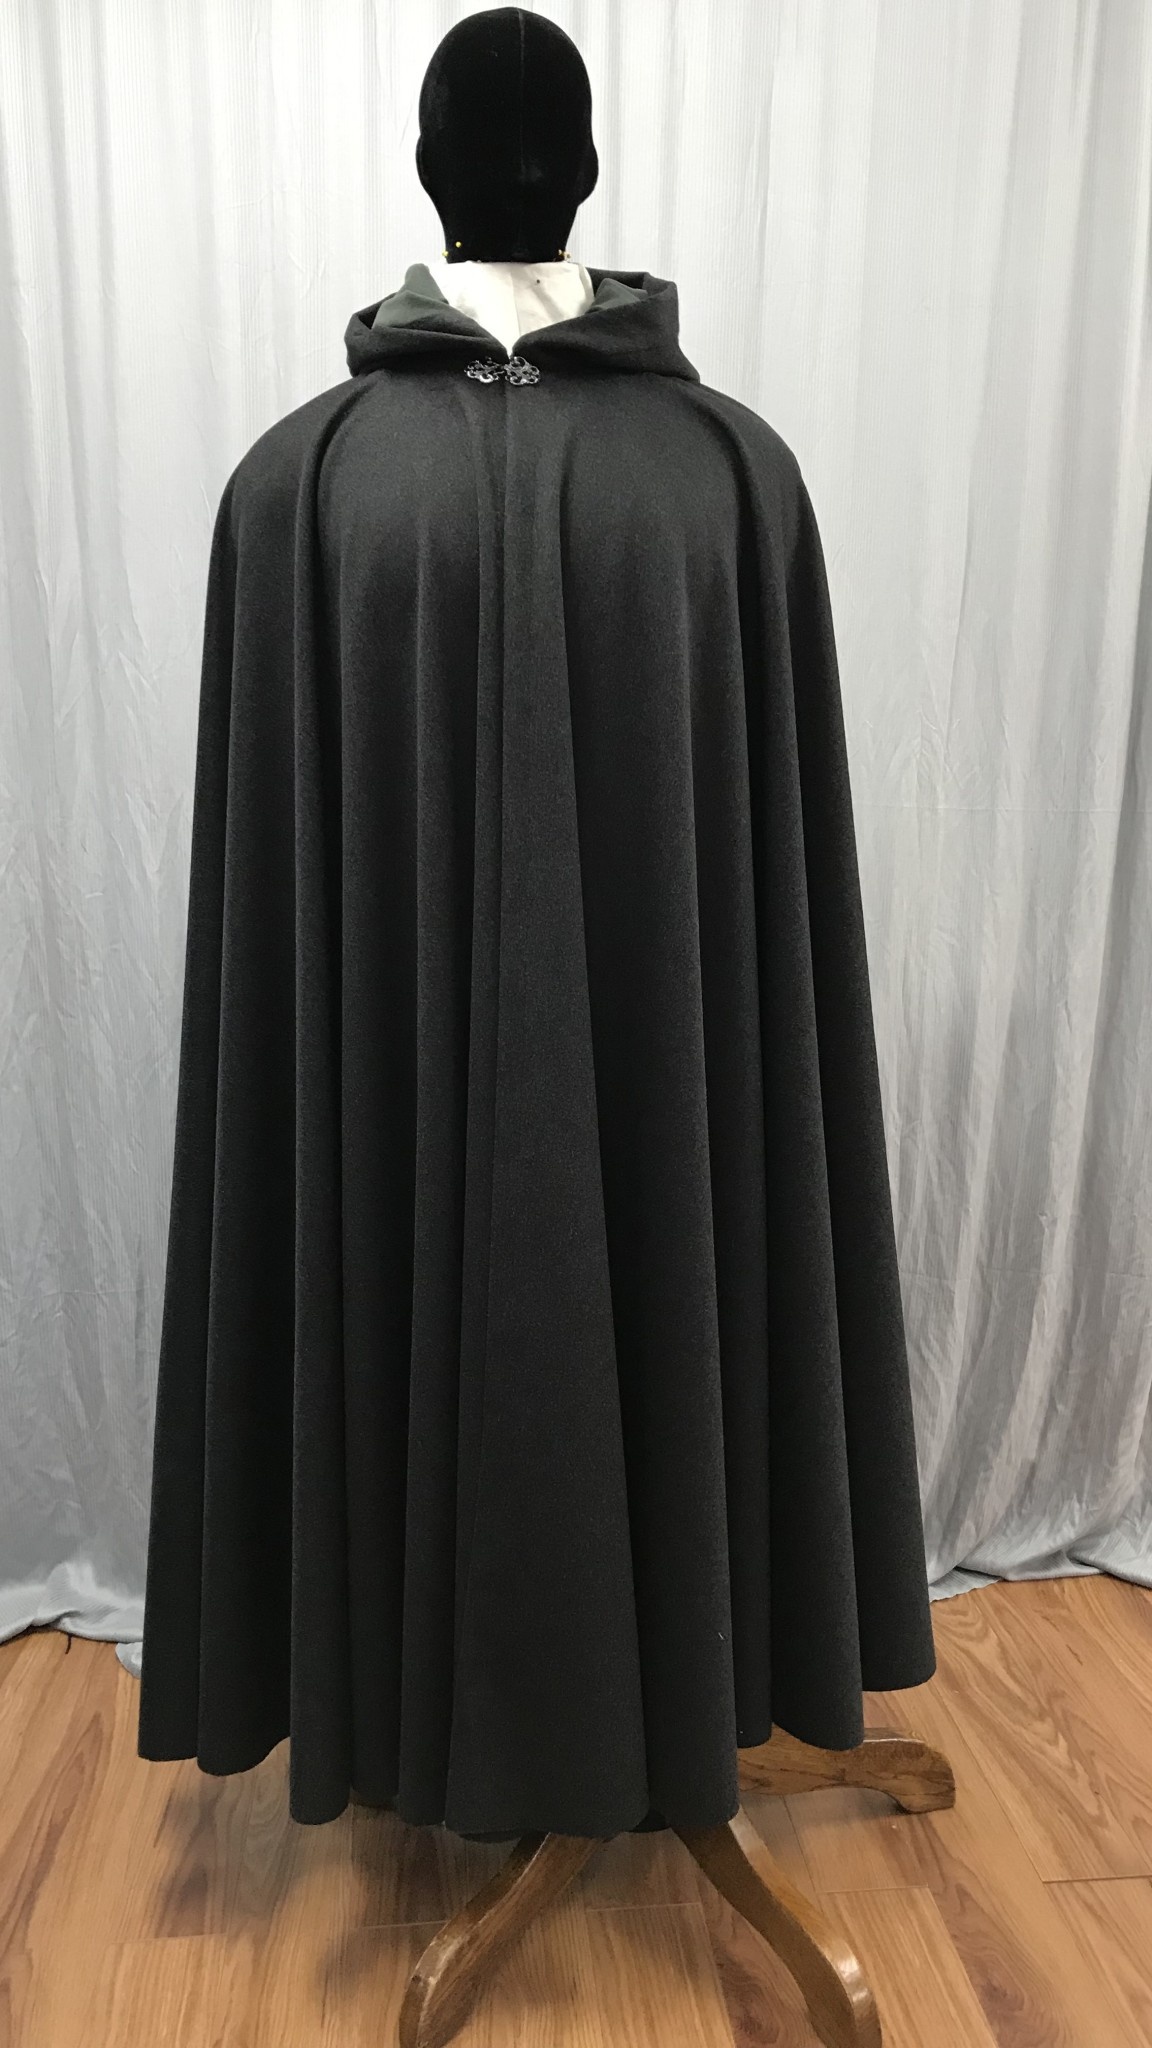 5146 - Charcoal Grey 100% Wool Long Cloak, Lined Hood - Cloak & Dagger ...